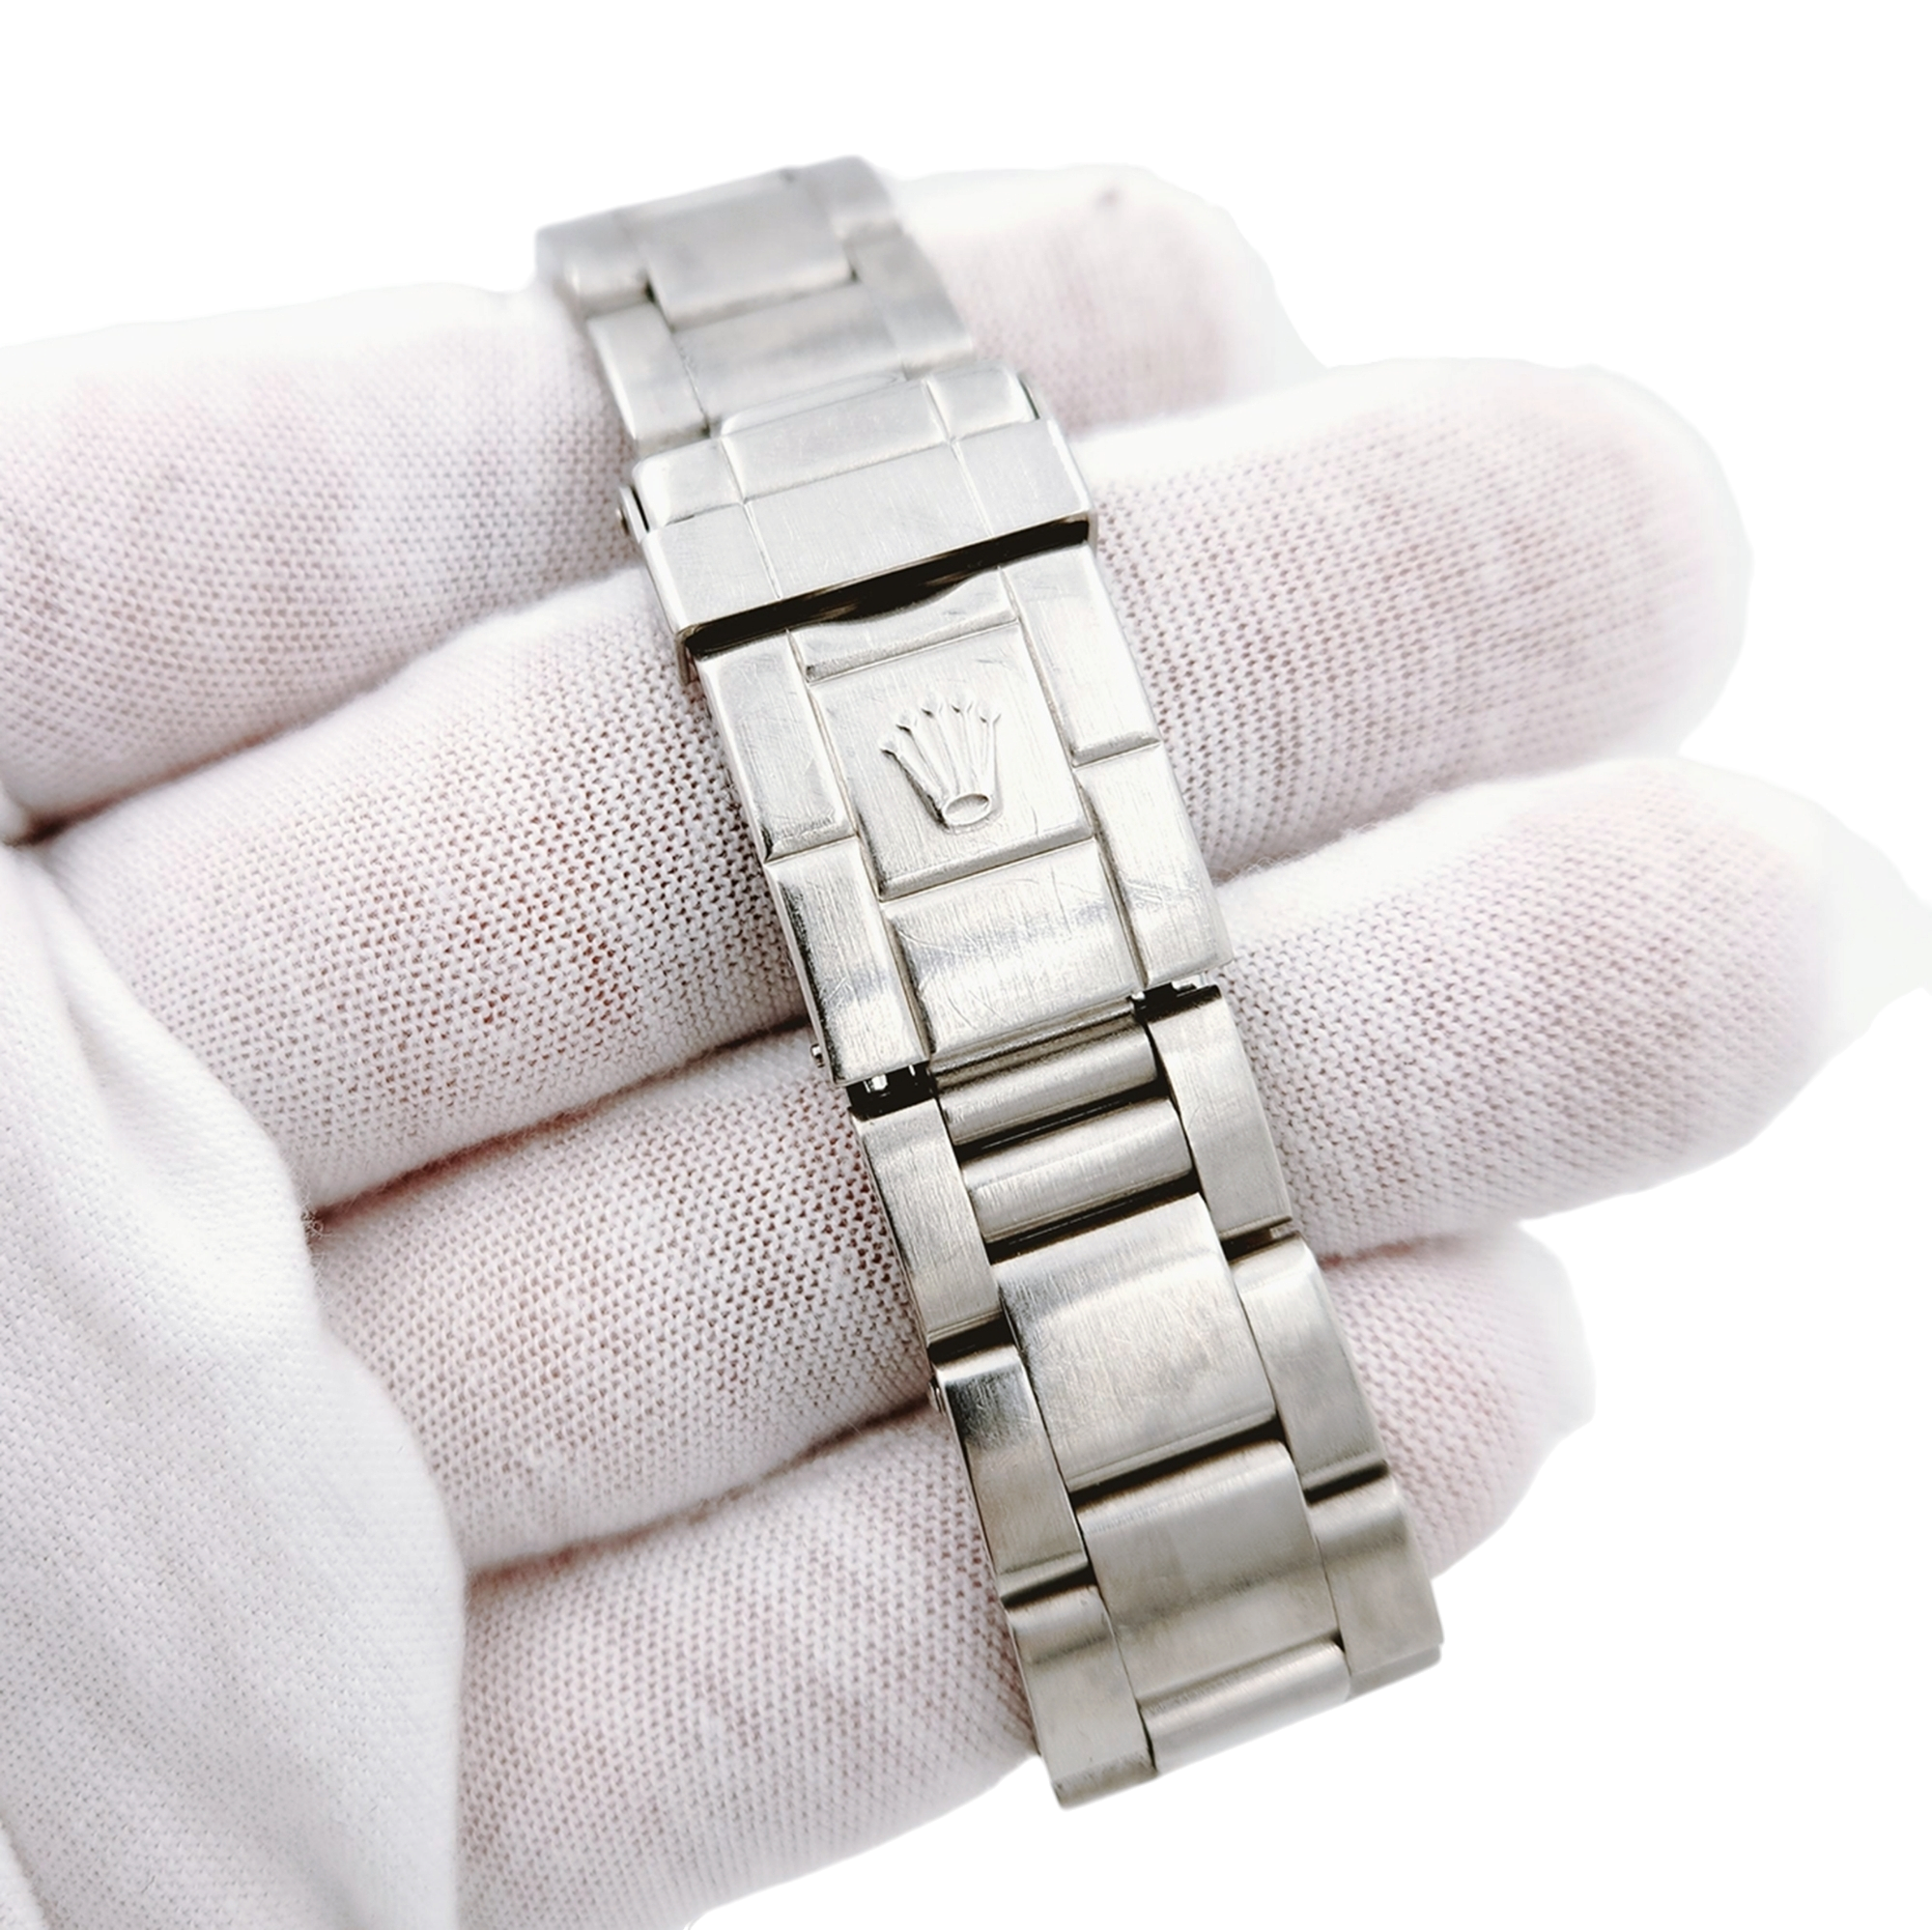 Men's Rolex 40mm Explorer II Stainless Steel Wristwatch w/ Oyster B& & Black Dial. (Pre-Owned 16570)